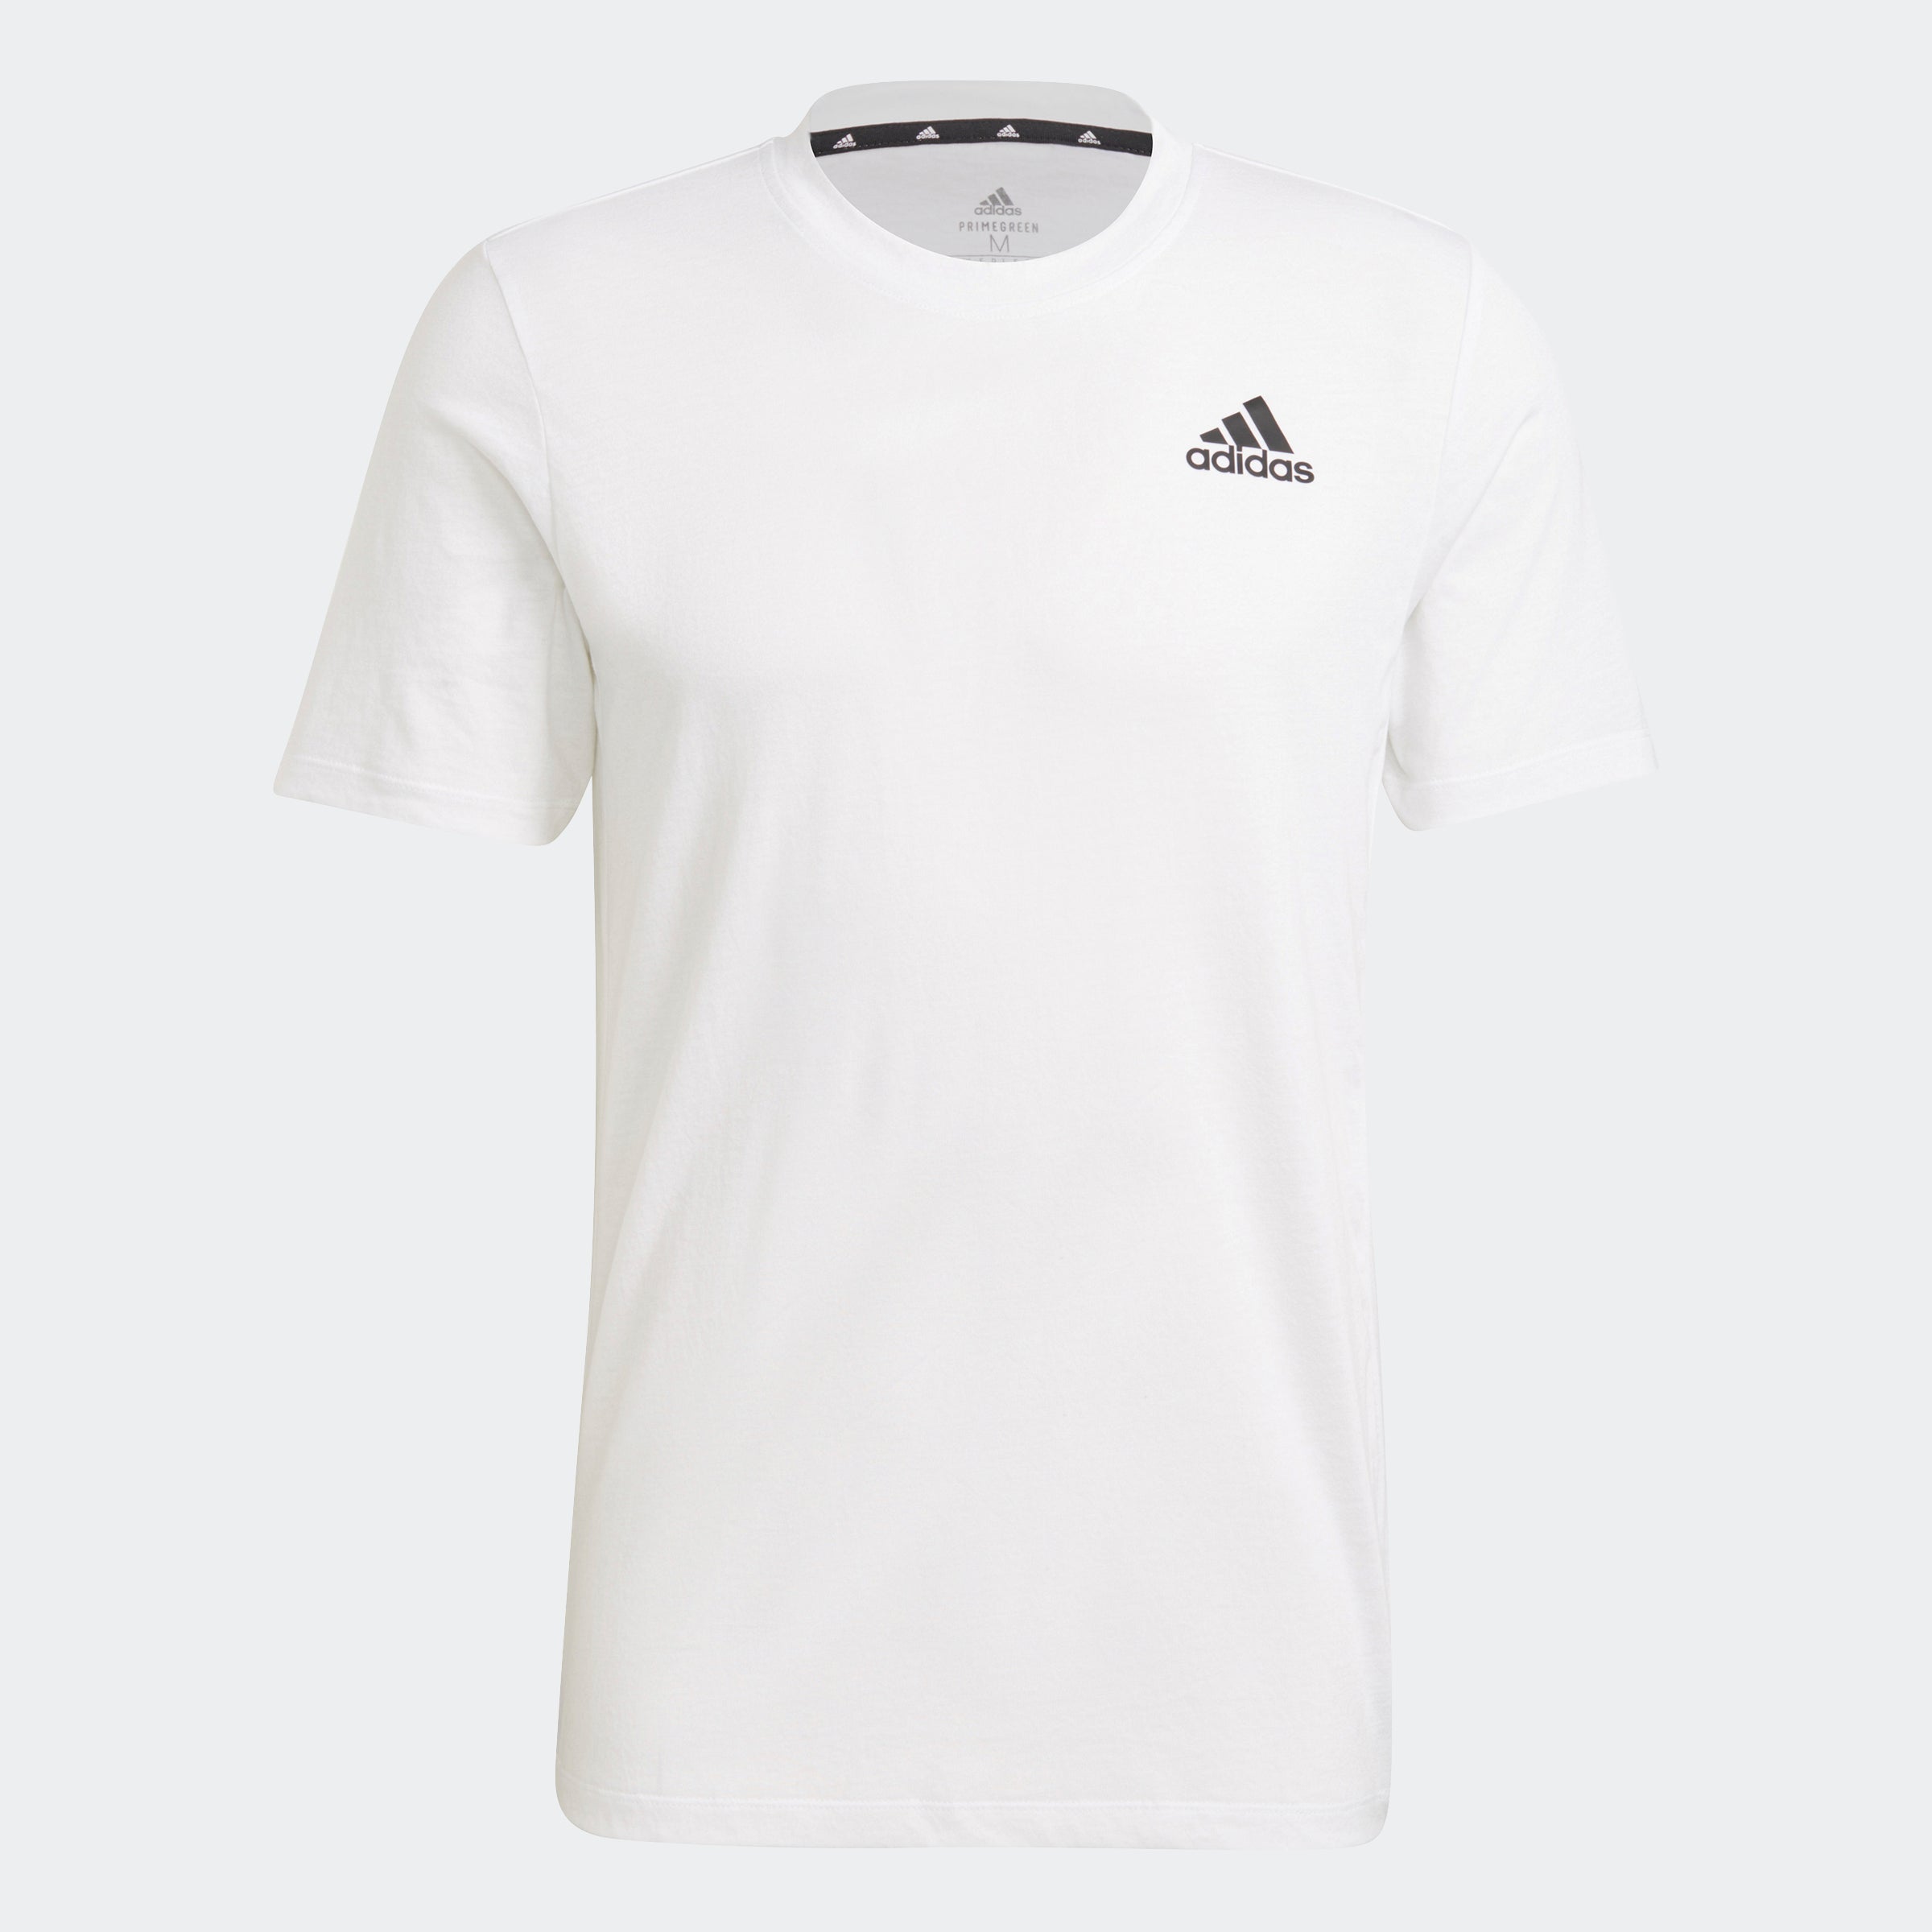 Adidas Men\'s Aeroready Designed to Sports Move White/Black in Tee